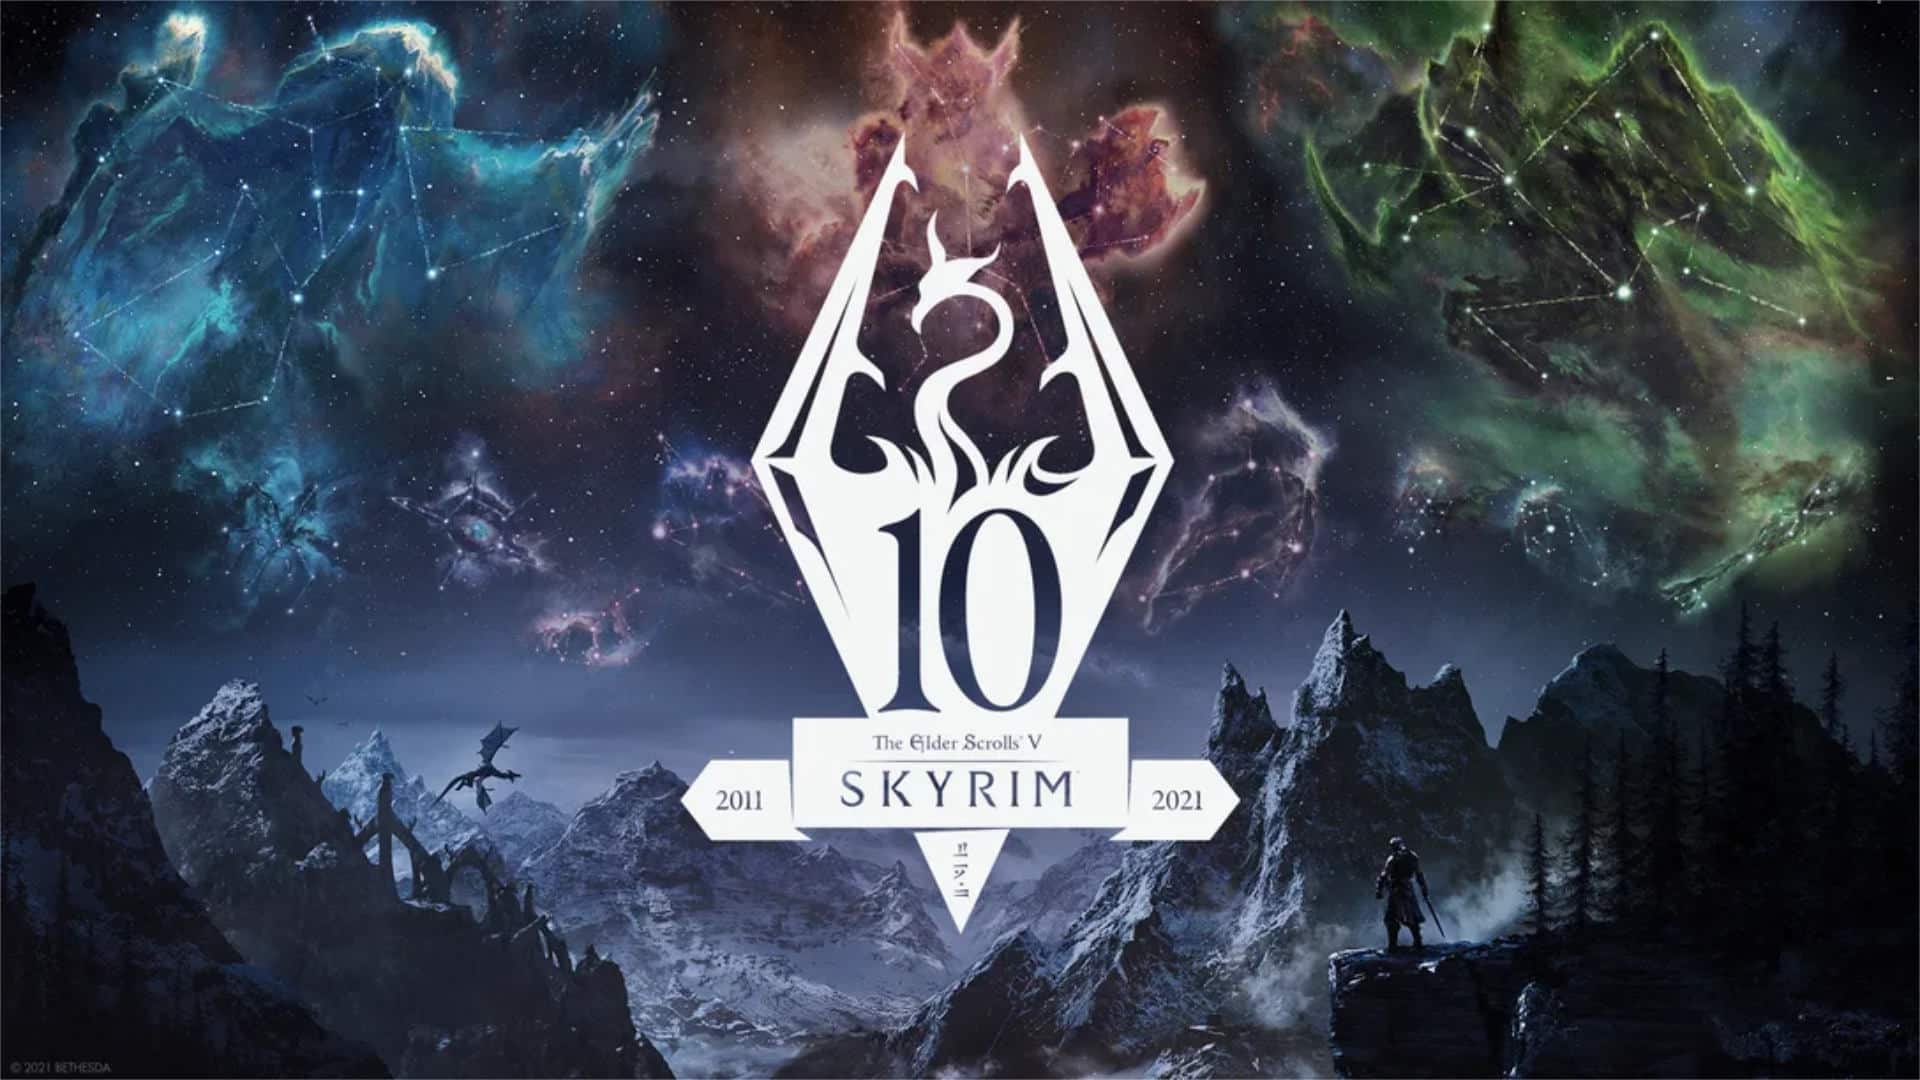 The Elder Scrolls V: Skyrim is Getting Released Again